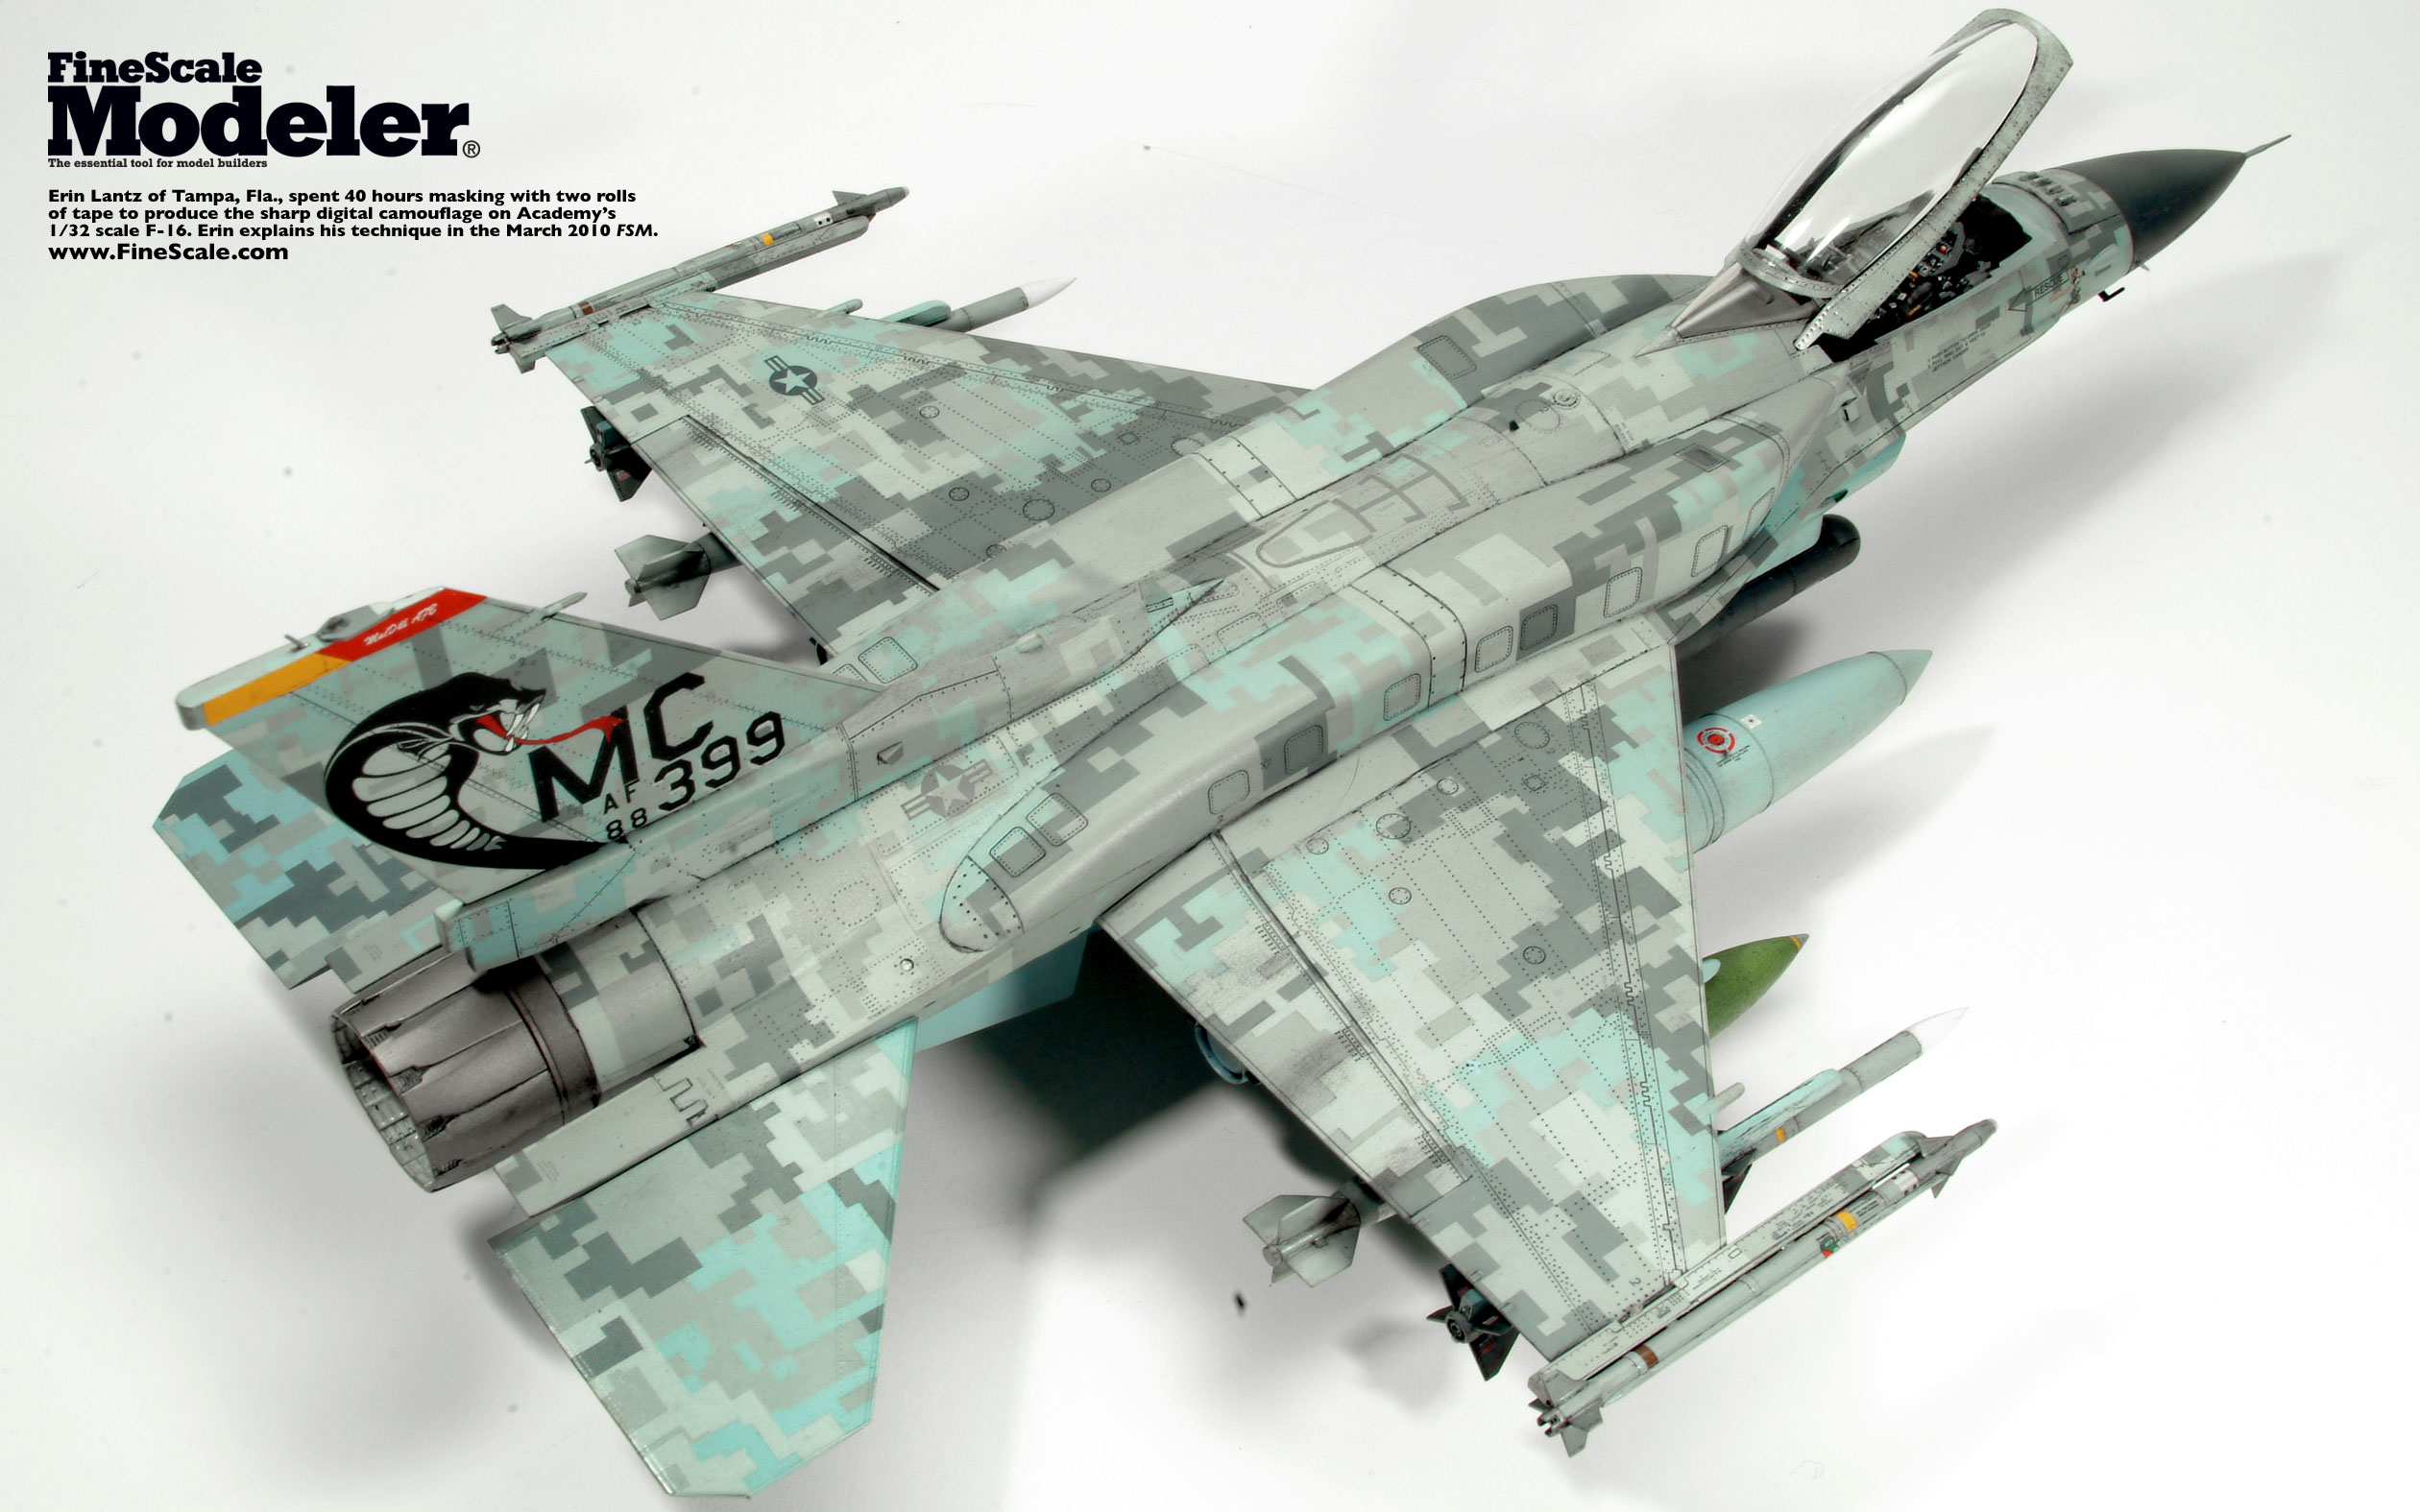 DESKTOP WALLPAPER: Erin Lantz's 1/32 scale F-16 | Finescale Modeler Magazine